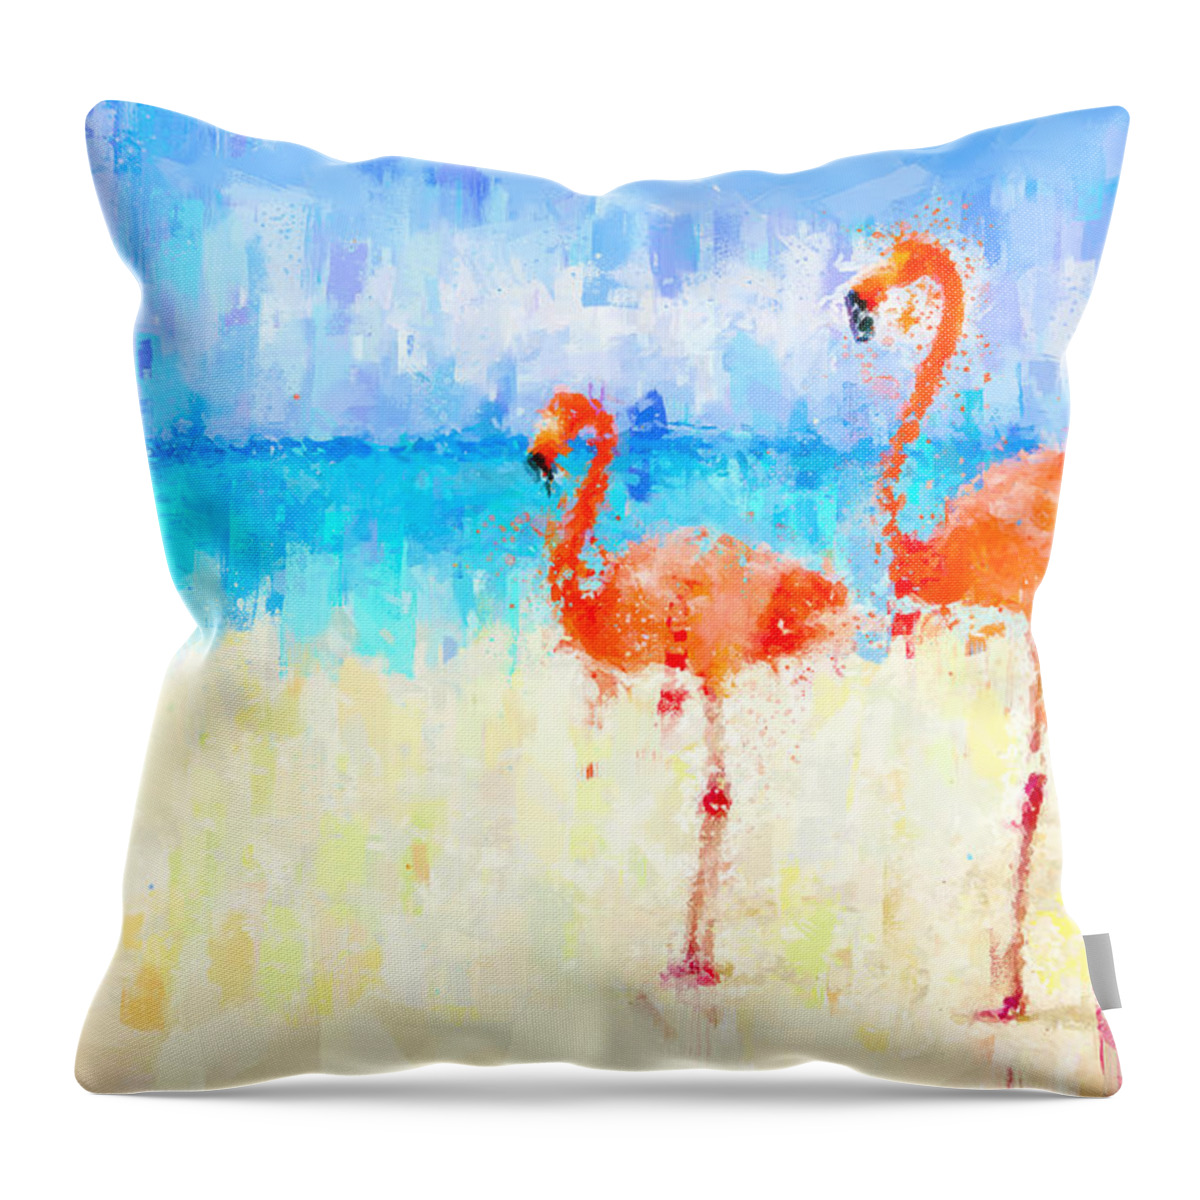 Flamingos Throw Pillow featuring the painting Flamingos by Vart Studio